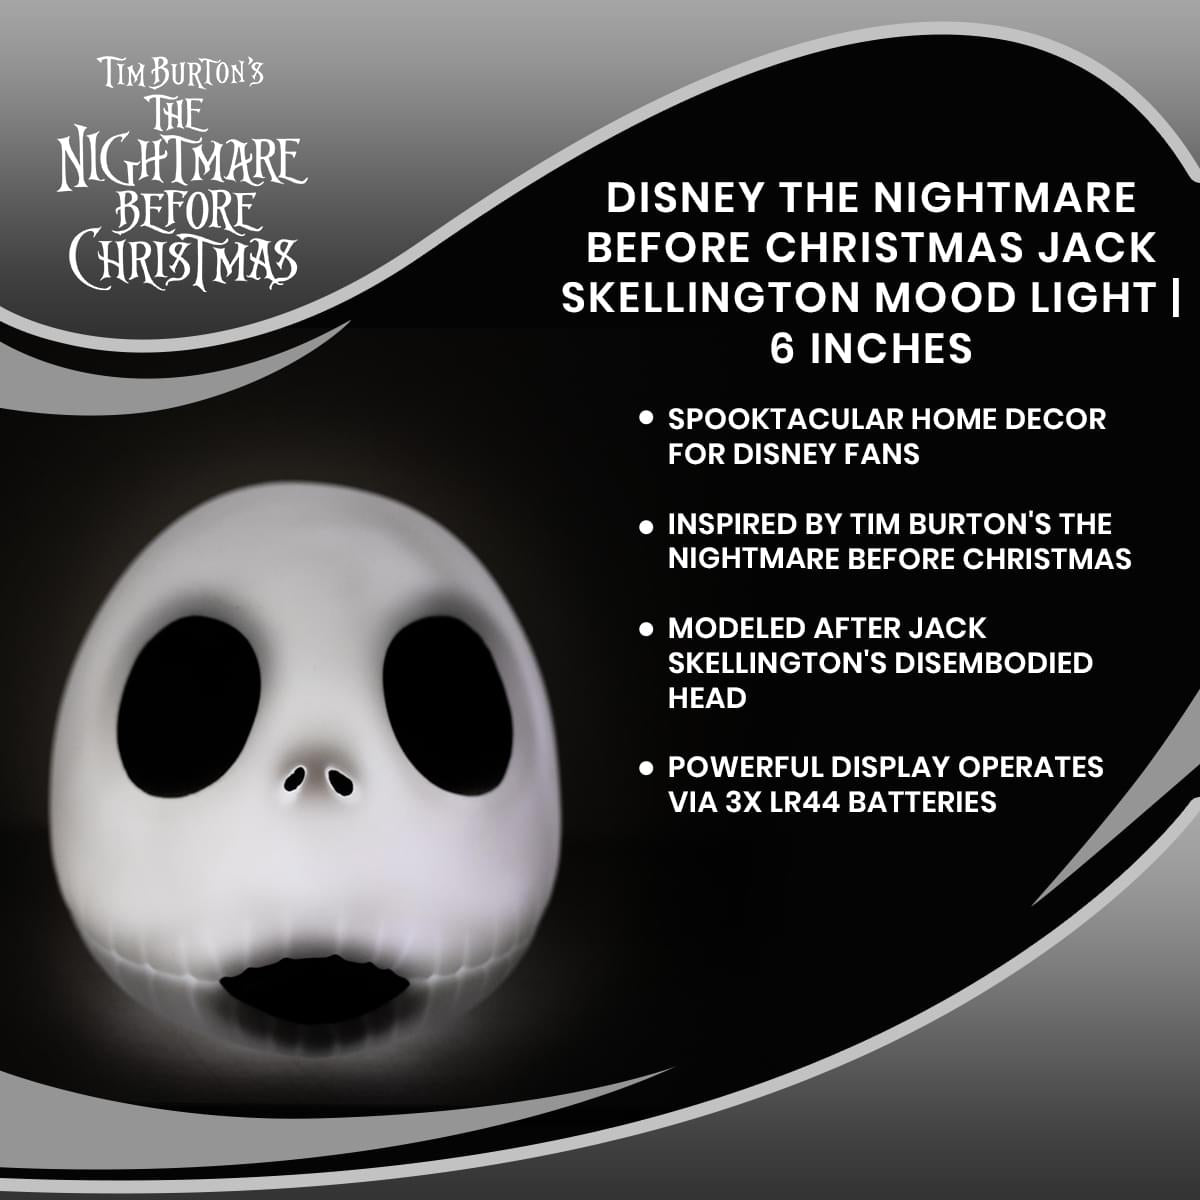 Disney The Nightmare Before Christmas Jack Skellington Mood Light | 6 Inches